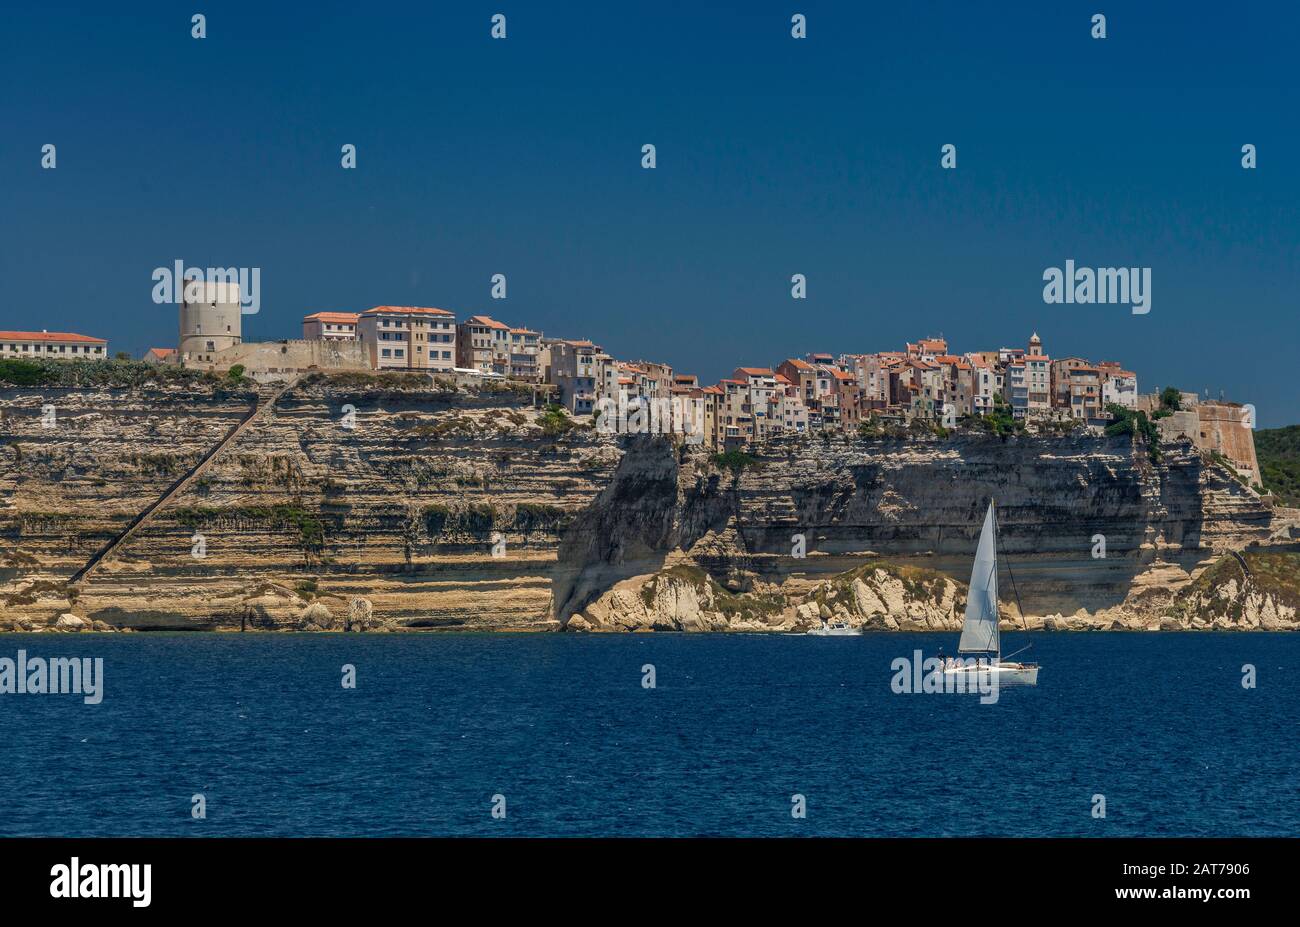 Citadelle on top of limestone cliffs, seen from the sea, King Aragon Steps on left, sailboat, Bonifacio, Corse-du-Sud, Corsica, France Stock Photo